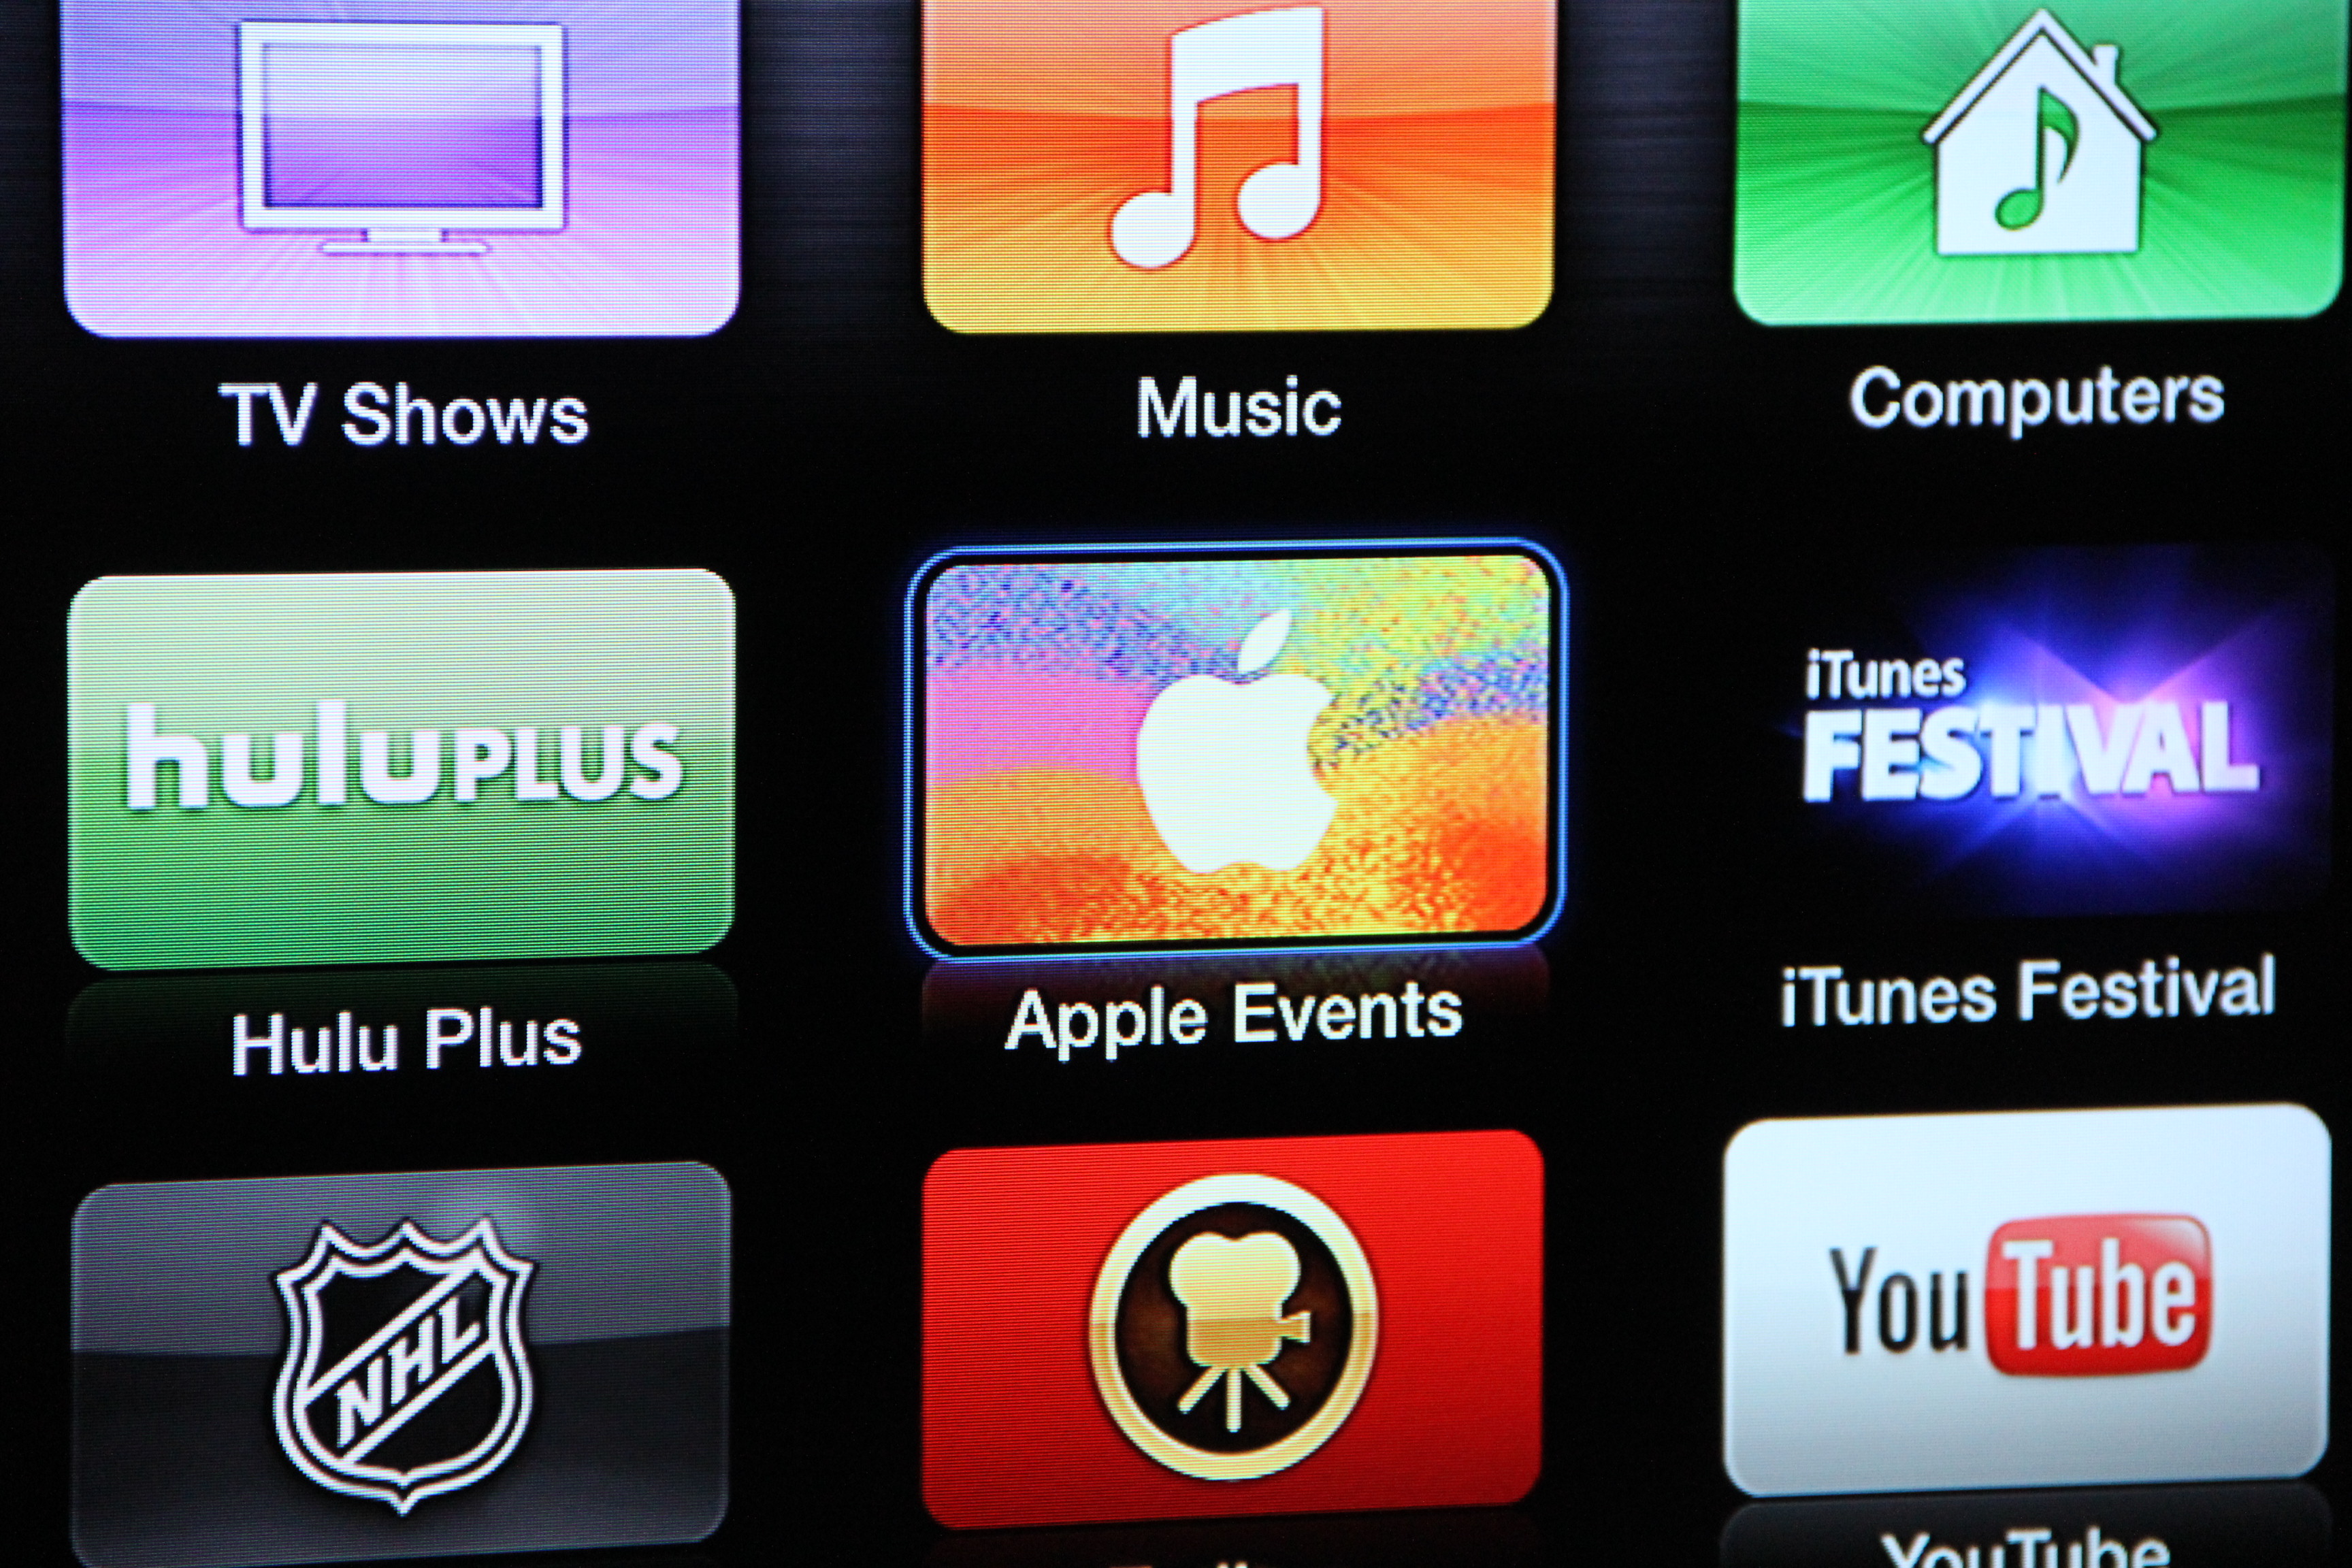 Apple live streaming todays iPad mini event on the Apple TV